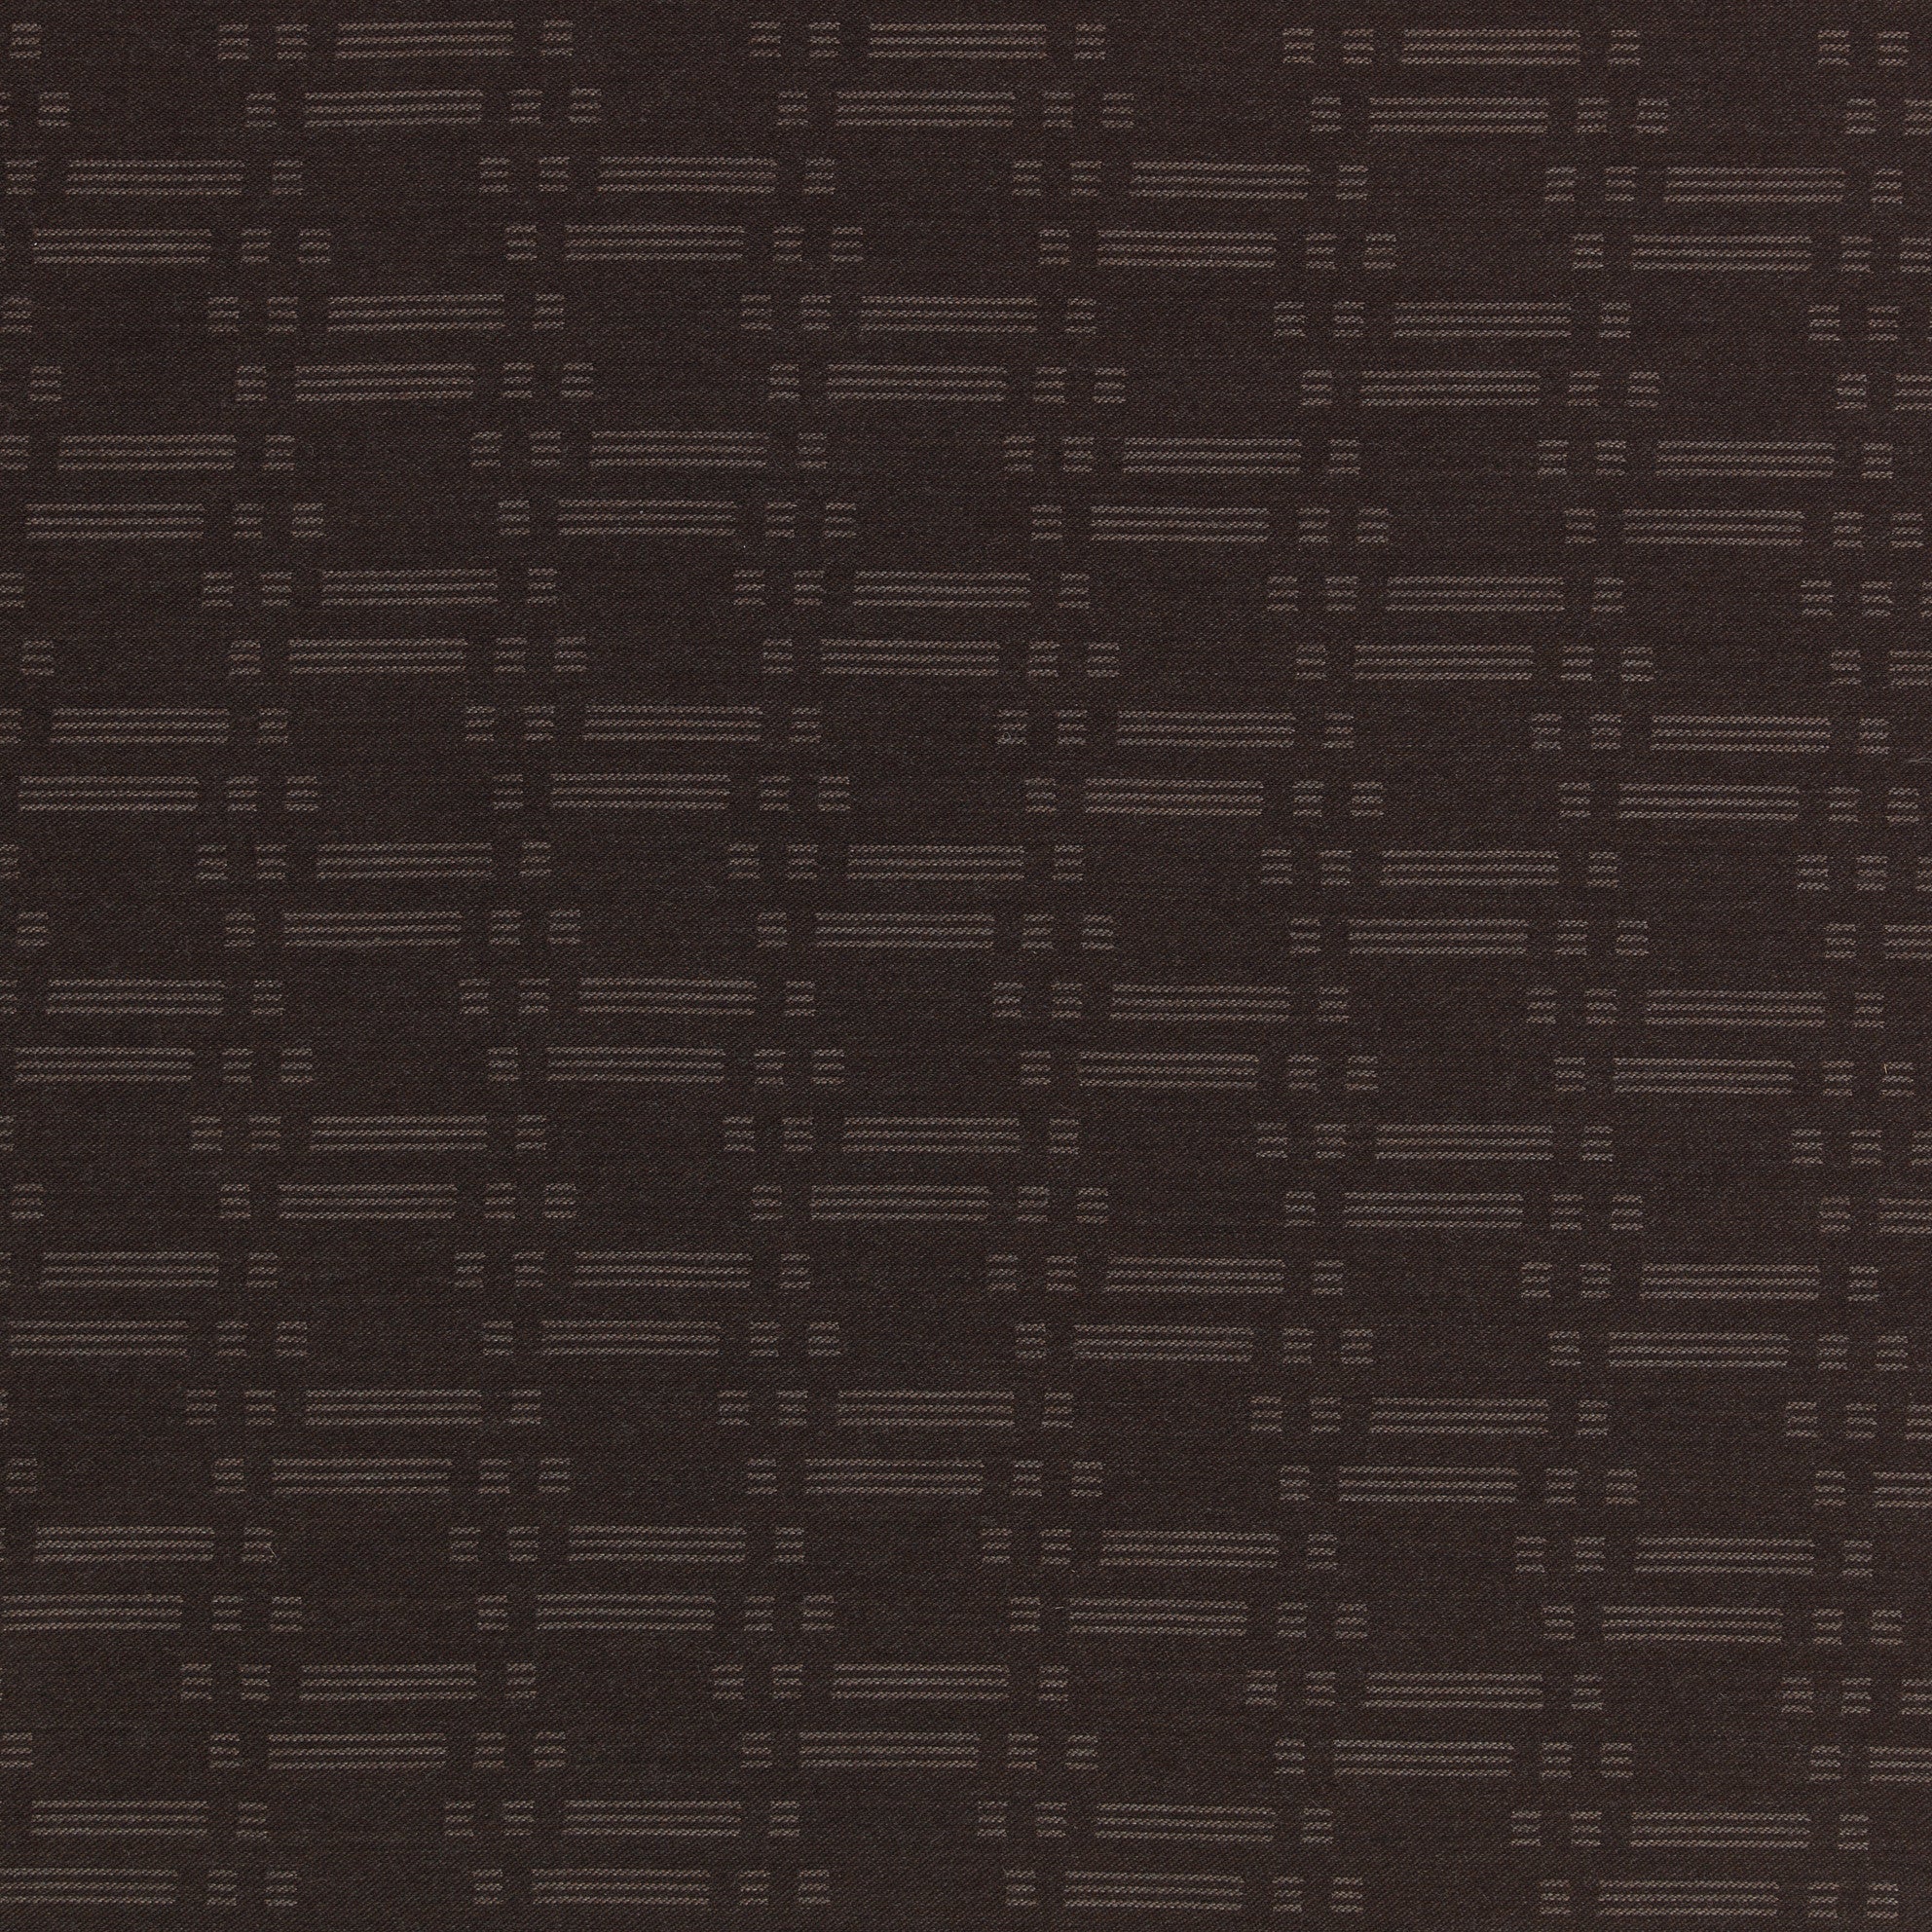 Triton Contract Furnishing Fabric - Brown | Nicholas Engert Interiors